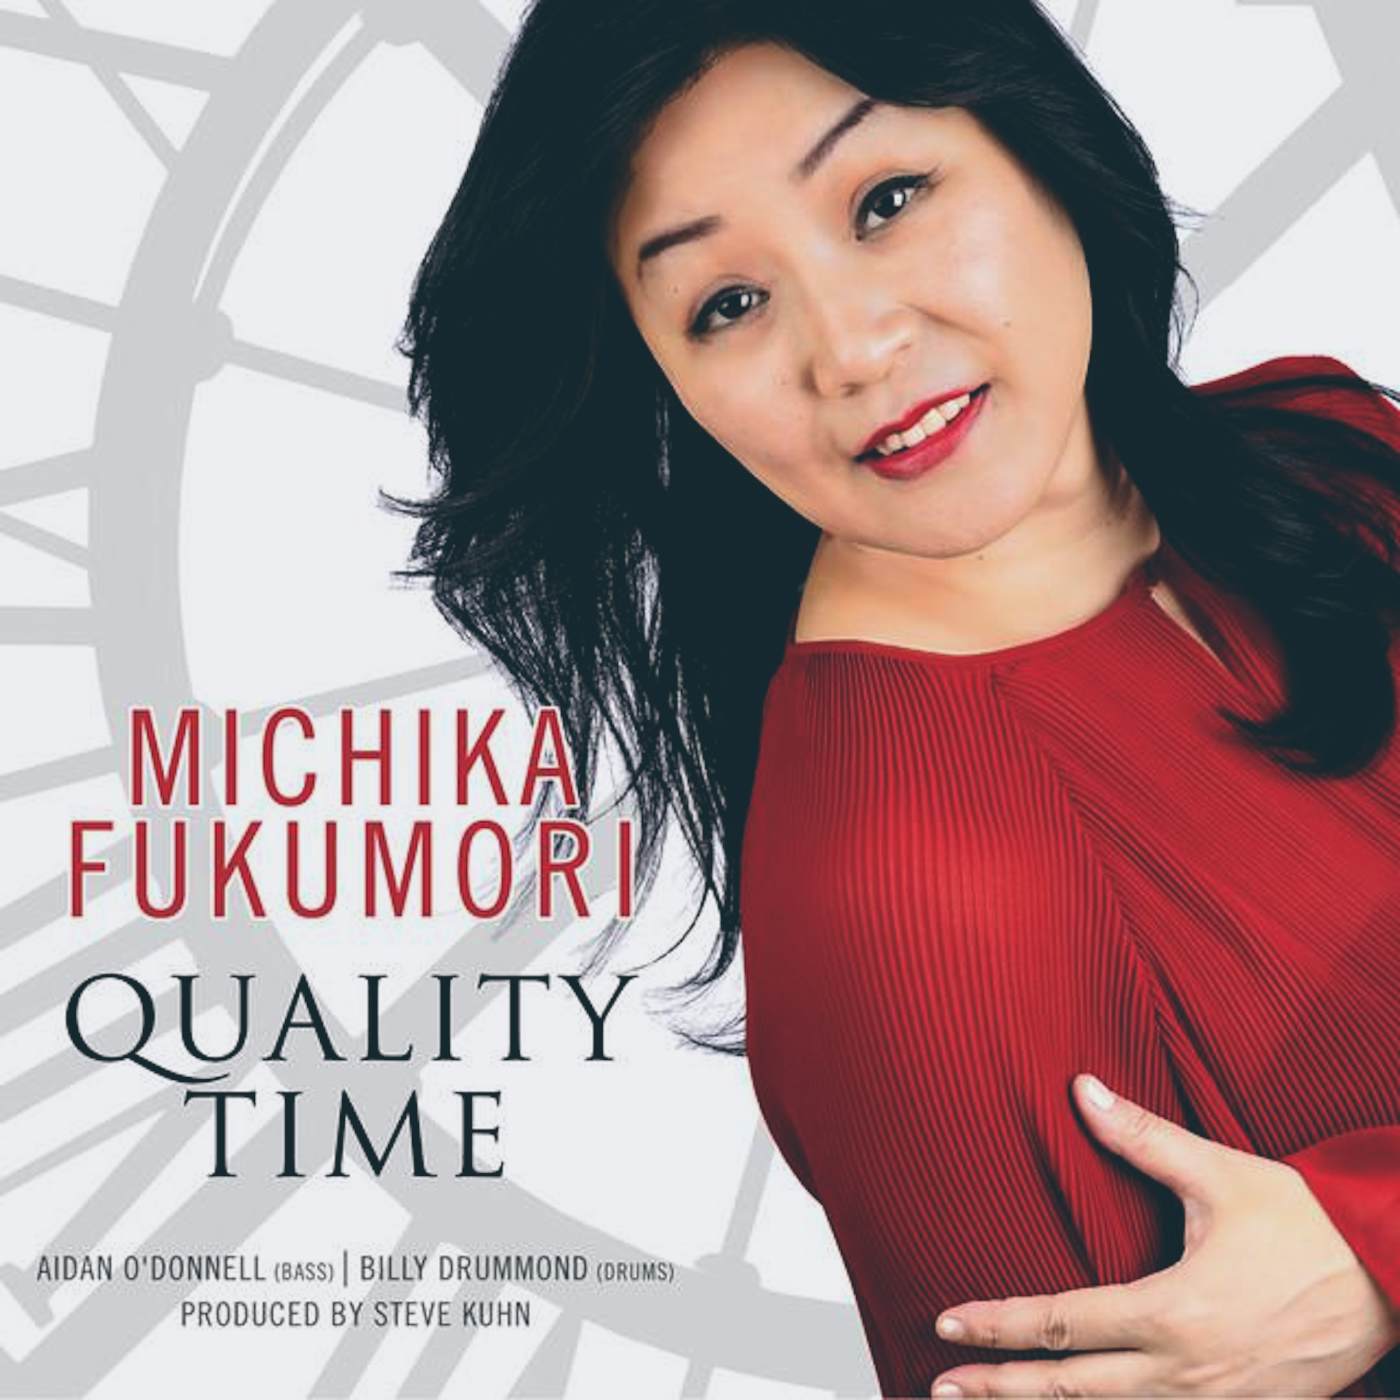 Michika Fukumori